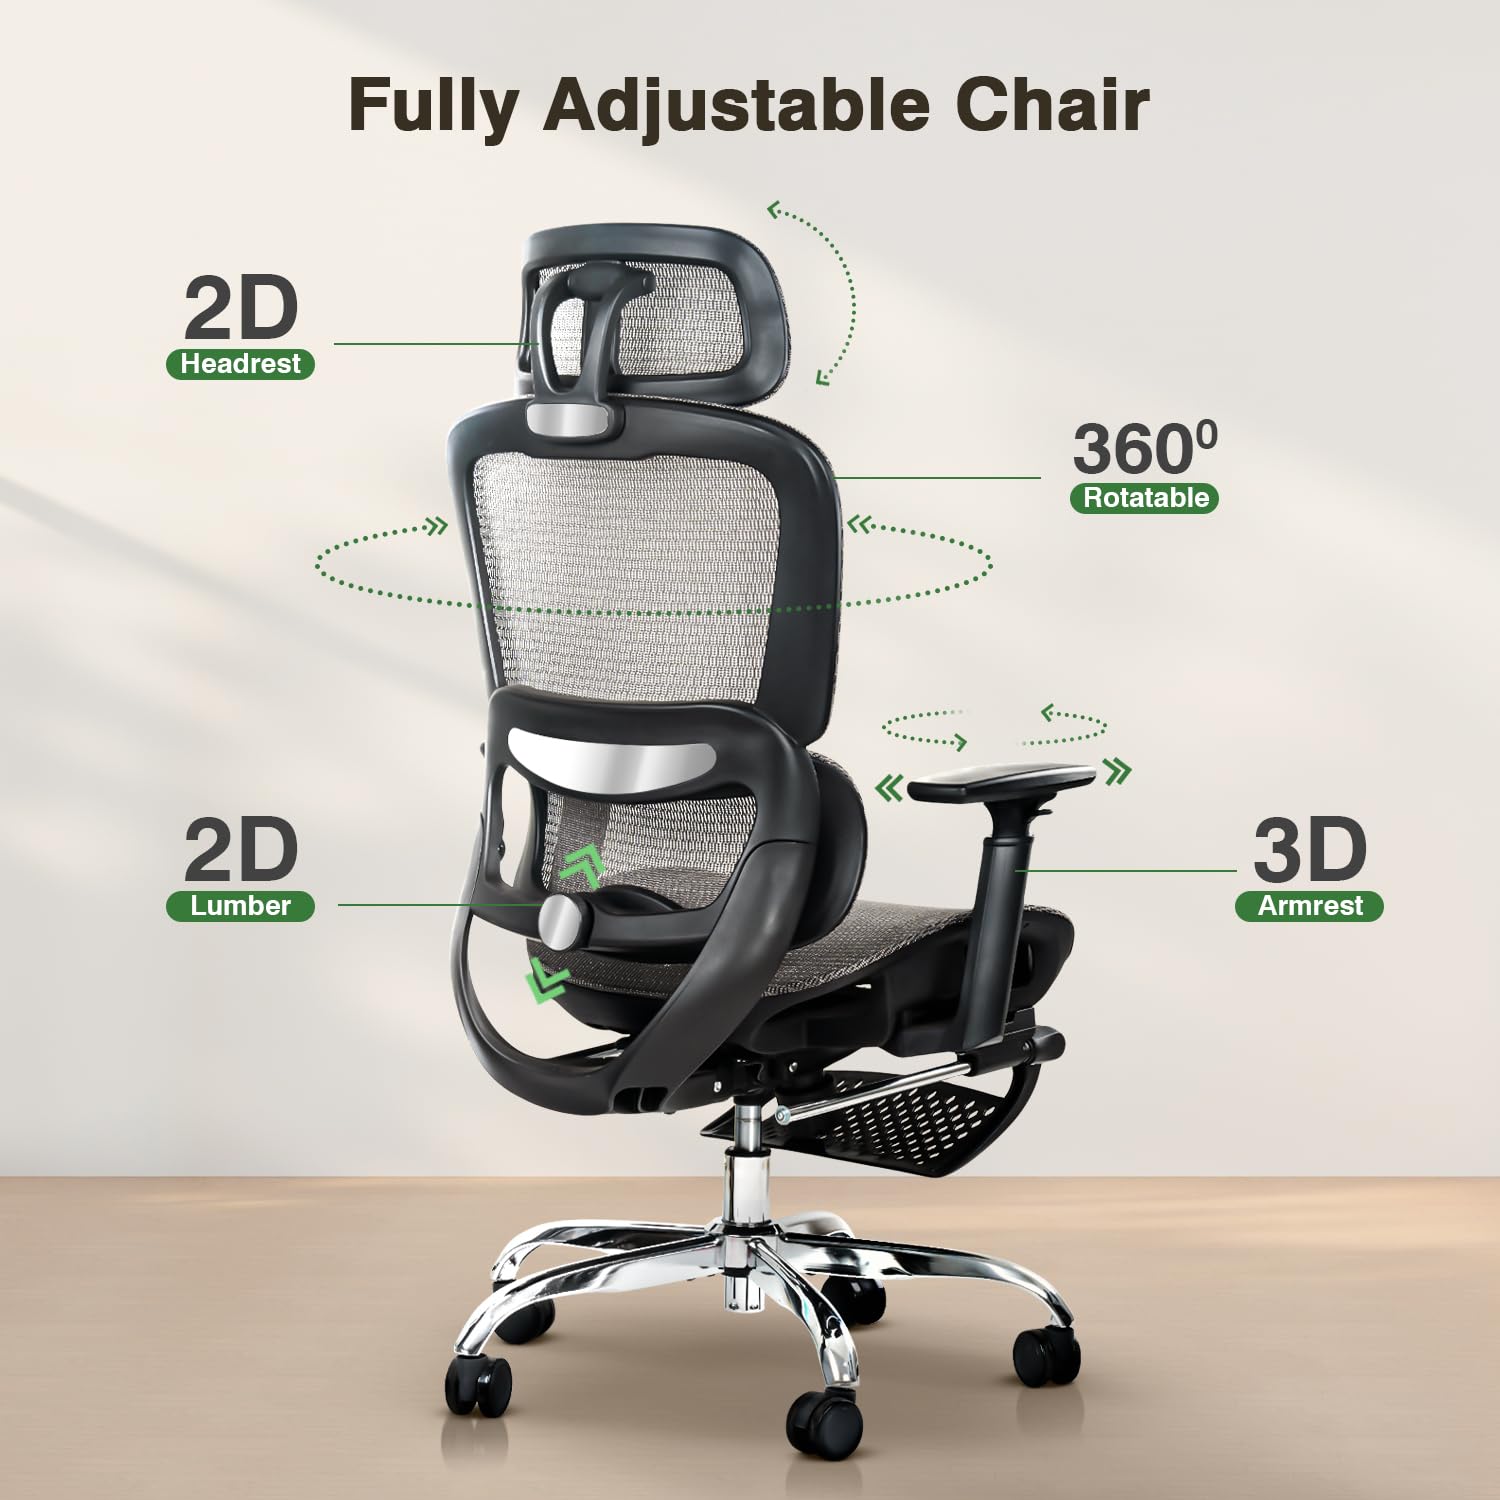 Drogo ProFlex Ergonomic Office Chair for Work from Home, Computer Chair with Adjustable Seat, 3D Armrest, Footrest, Recline 2D Headrest & Lumbar Support - Pro Grey